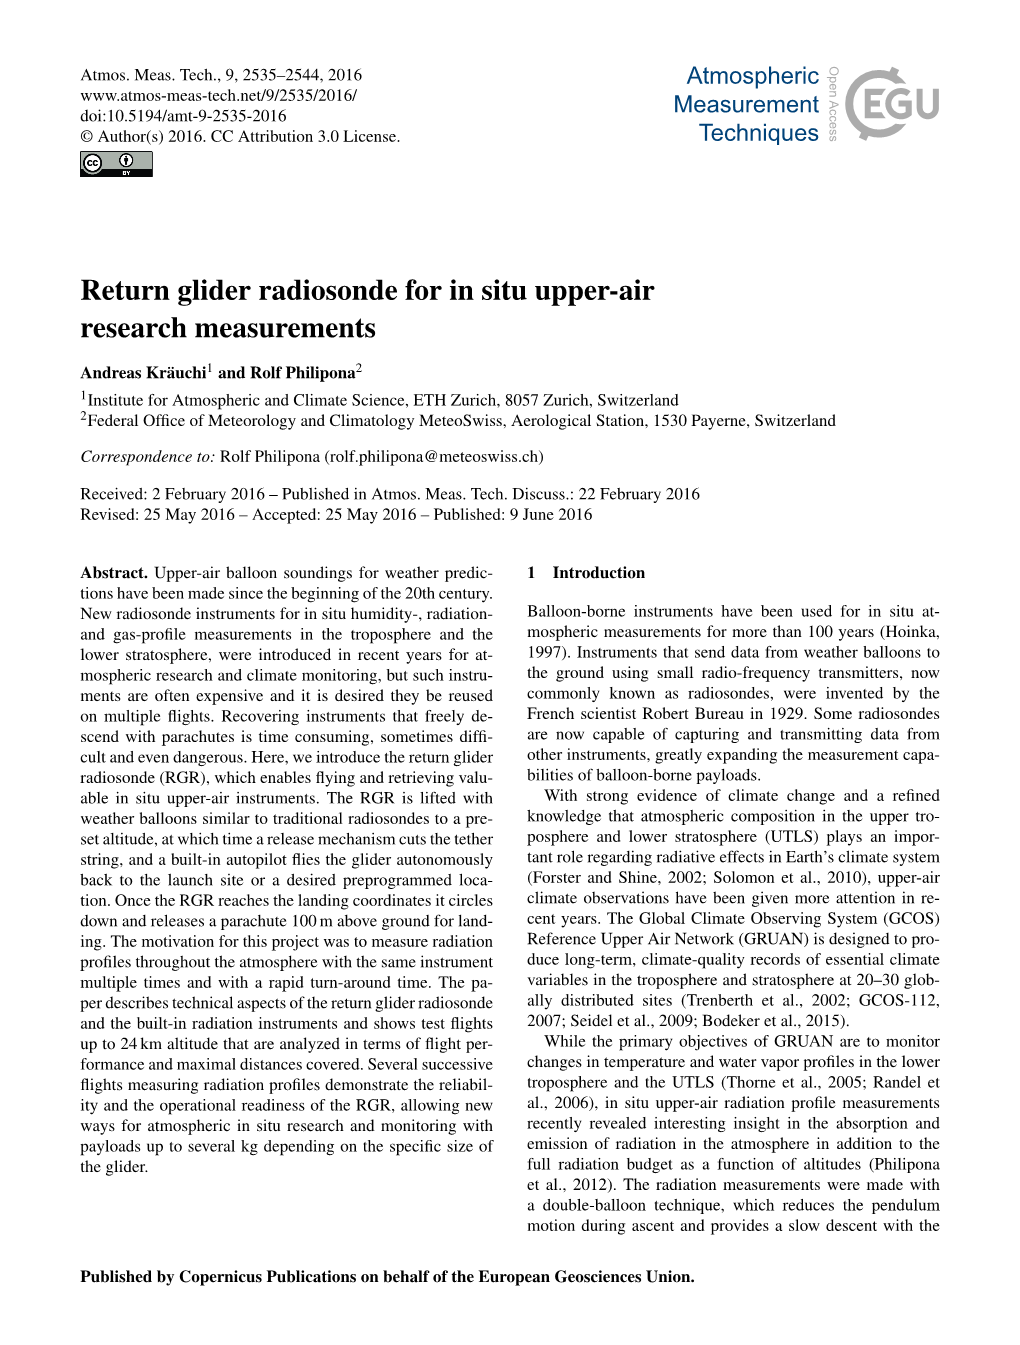 Return Glider Radiosonde for in Situ Upper-Air Research Measurements